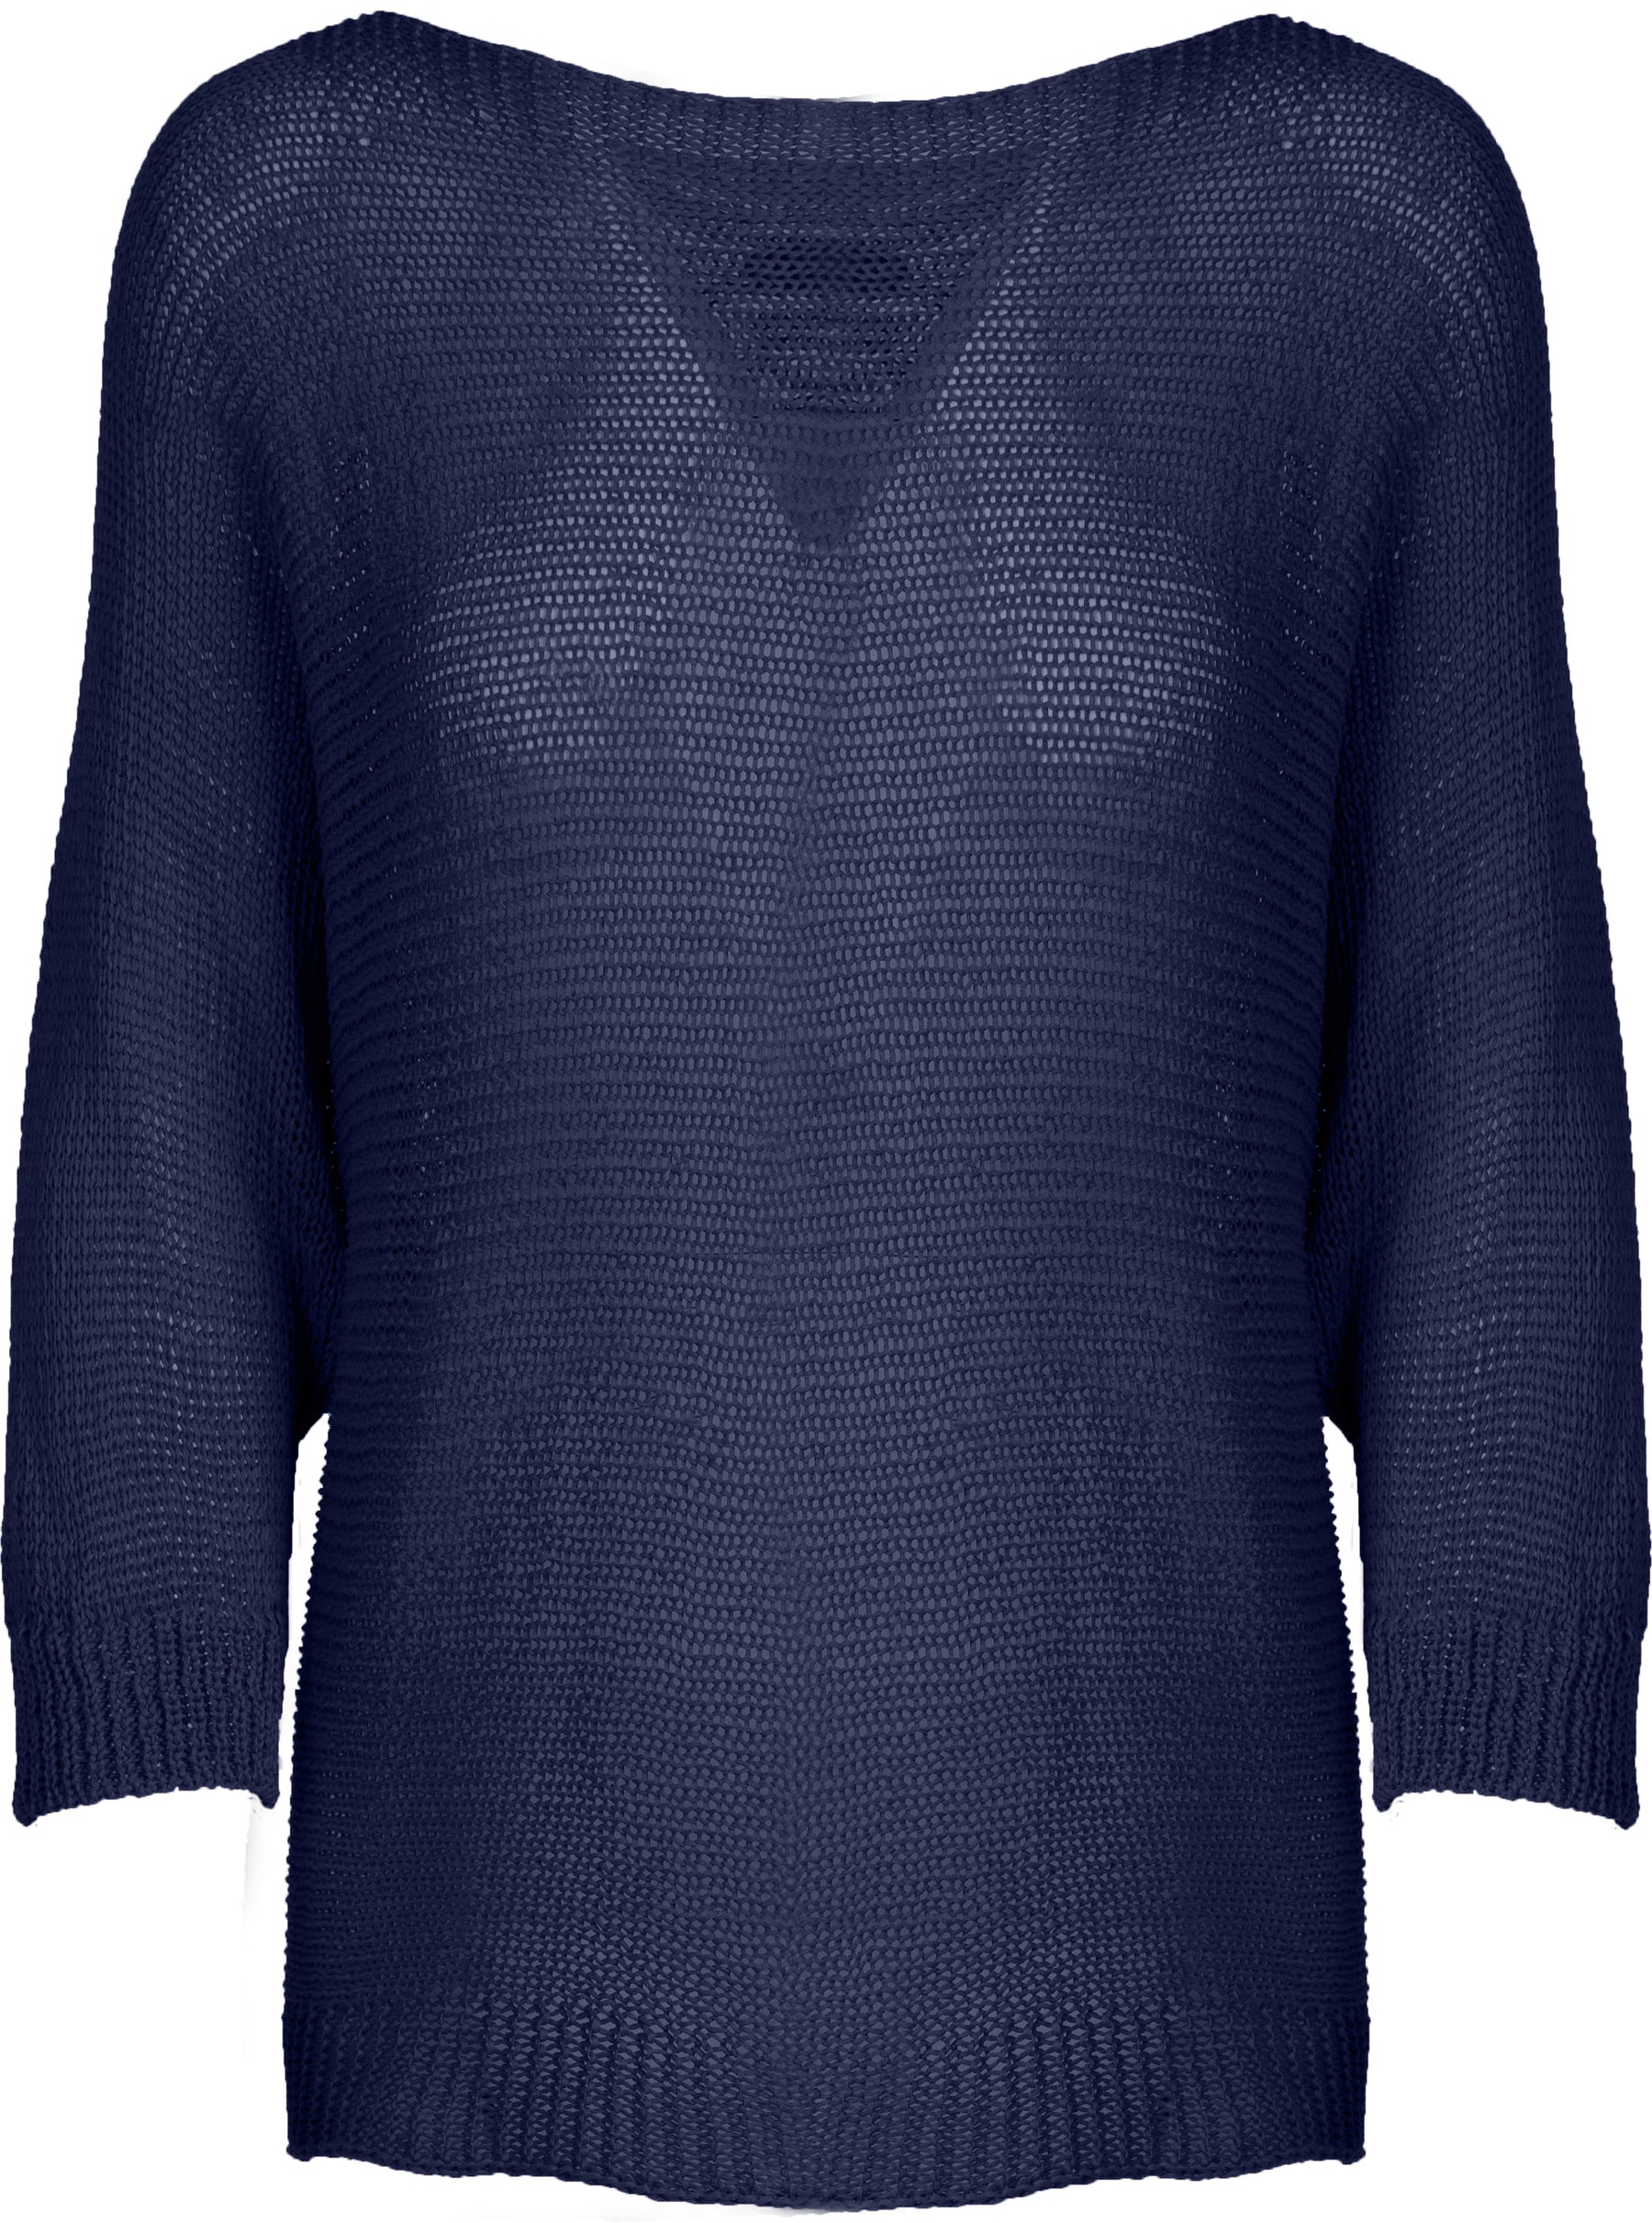 Sweater M Italy 33-1395